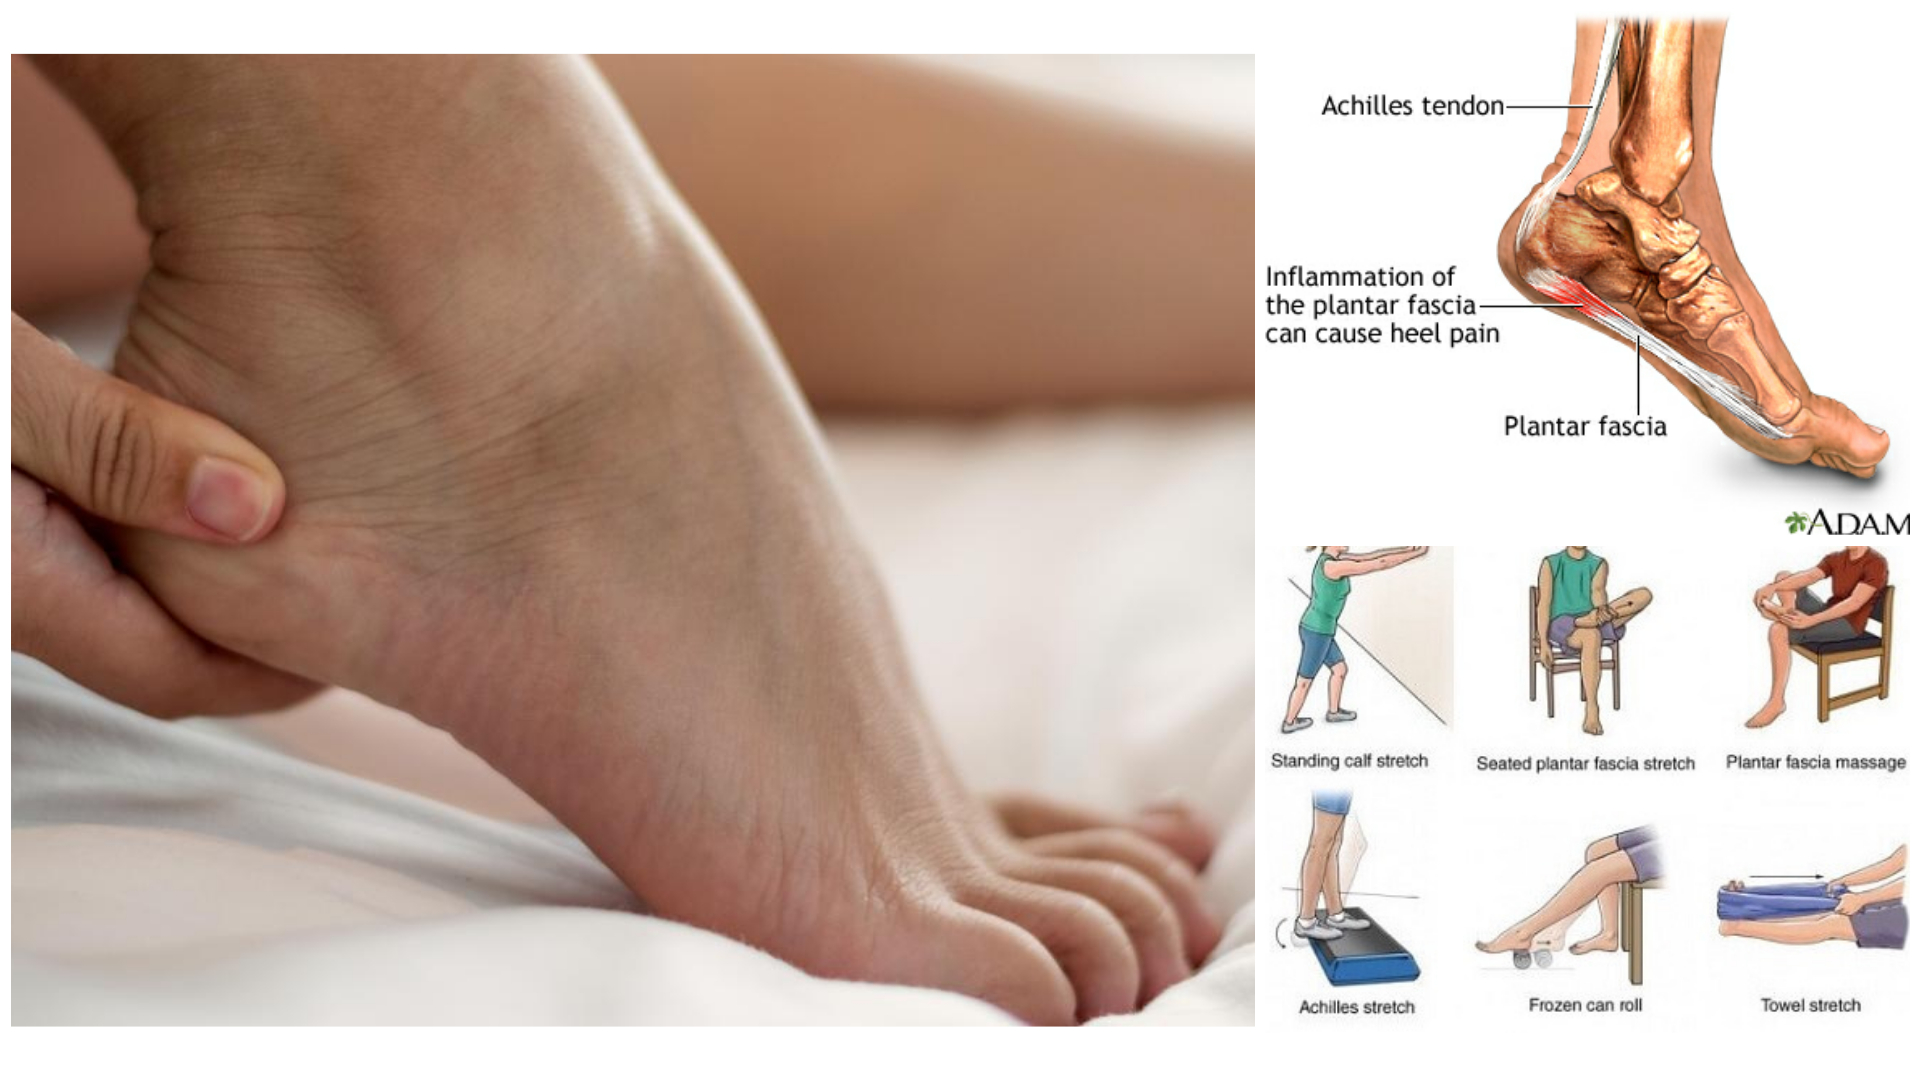 Punca sakit tumit kaki bagi wanita